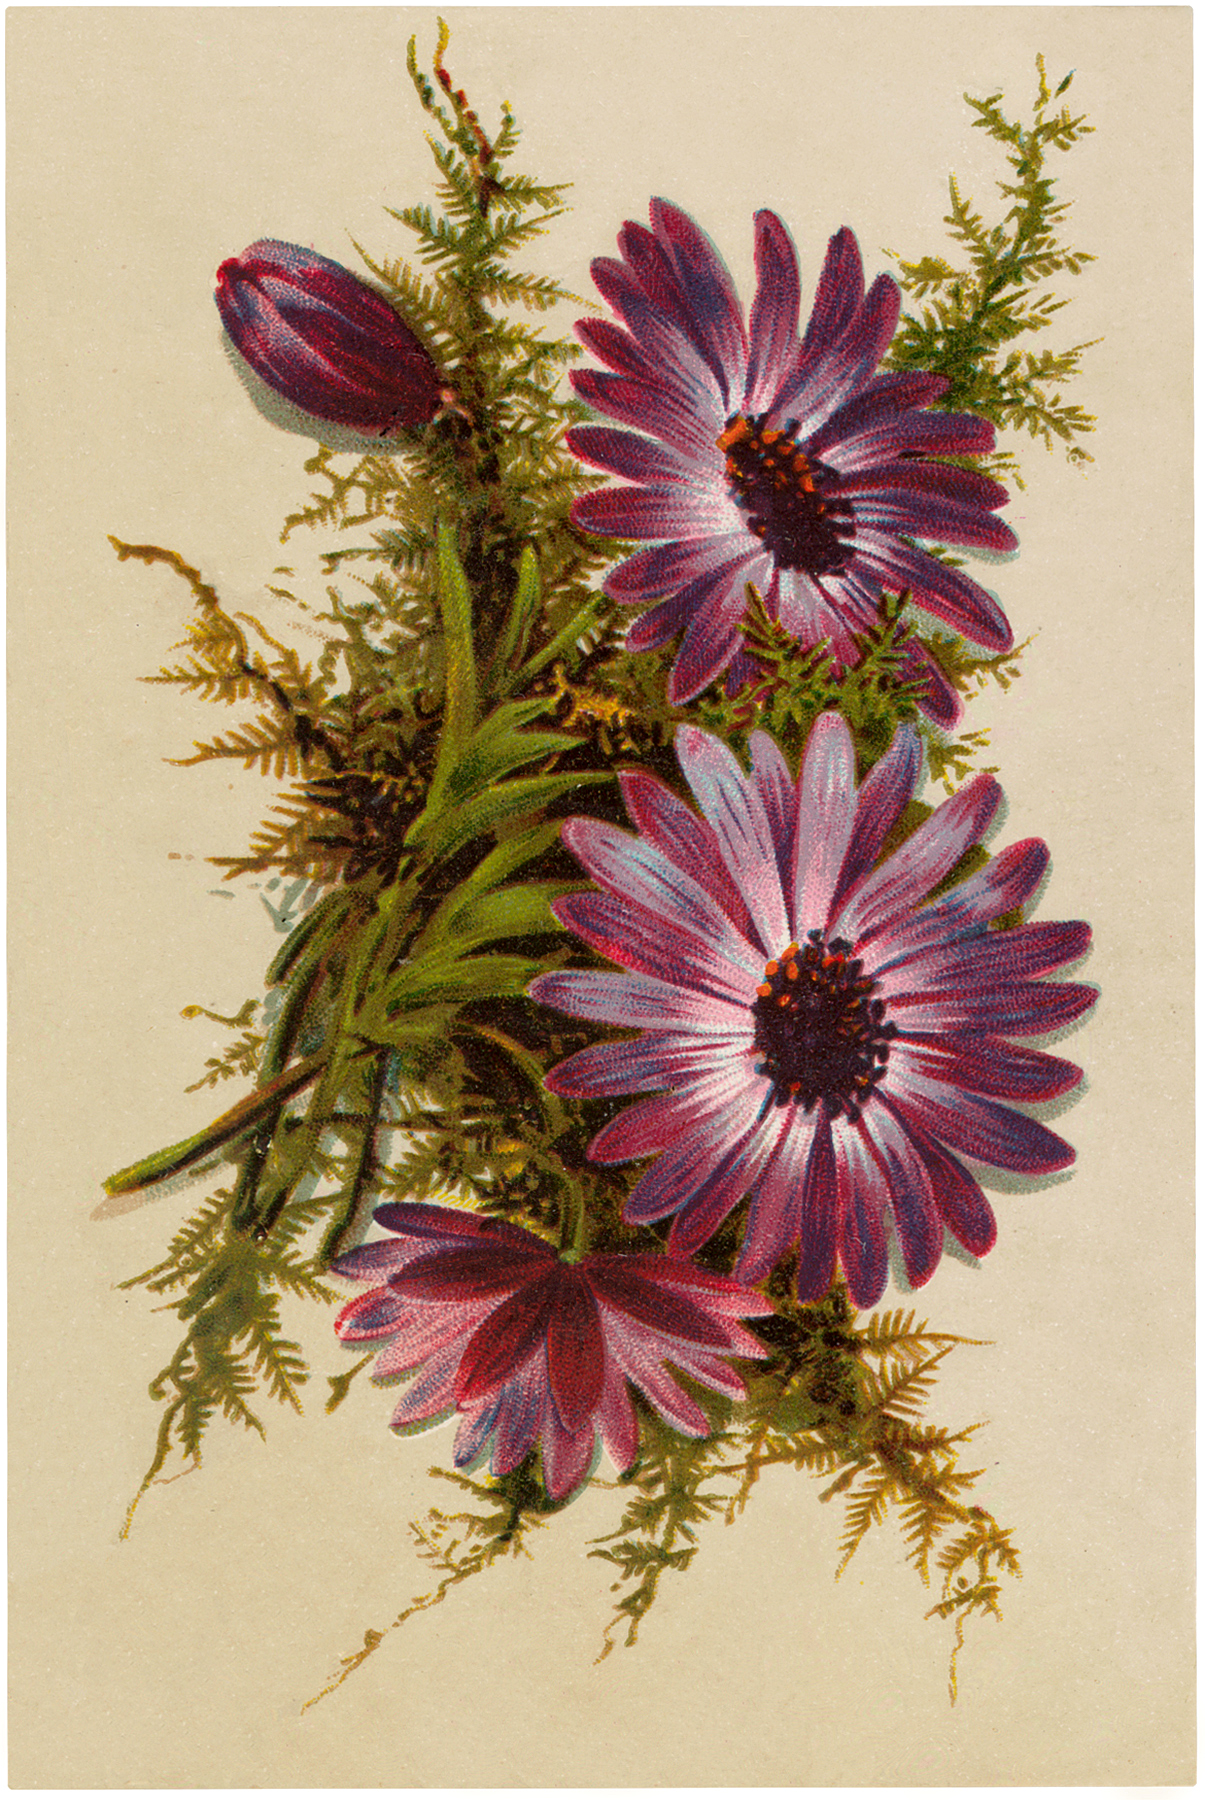 Pretty Purple Flowers Image - The Graphics Fairy